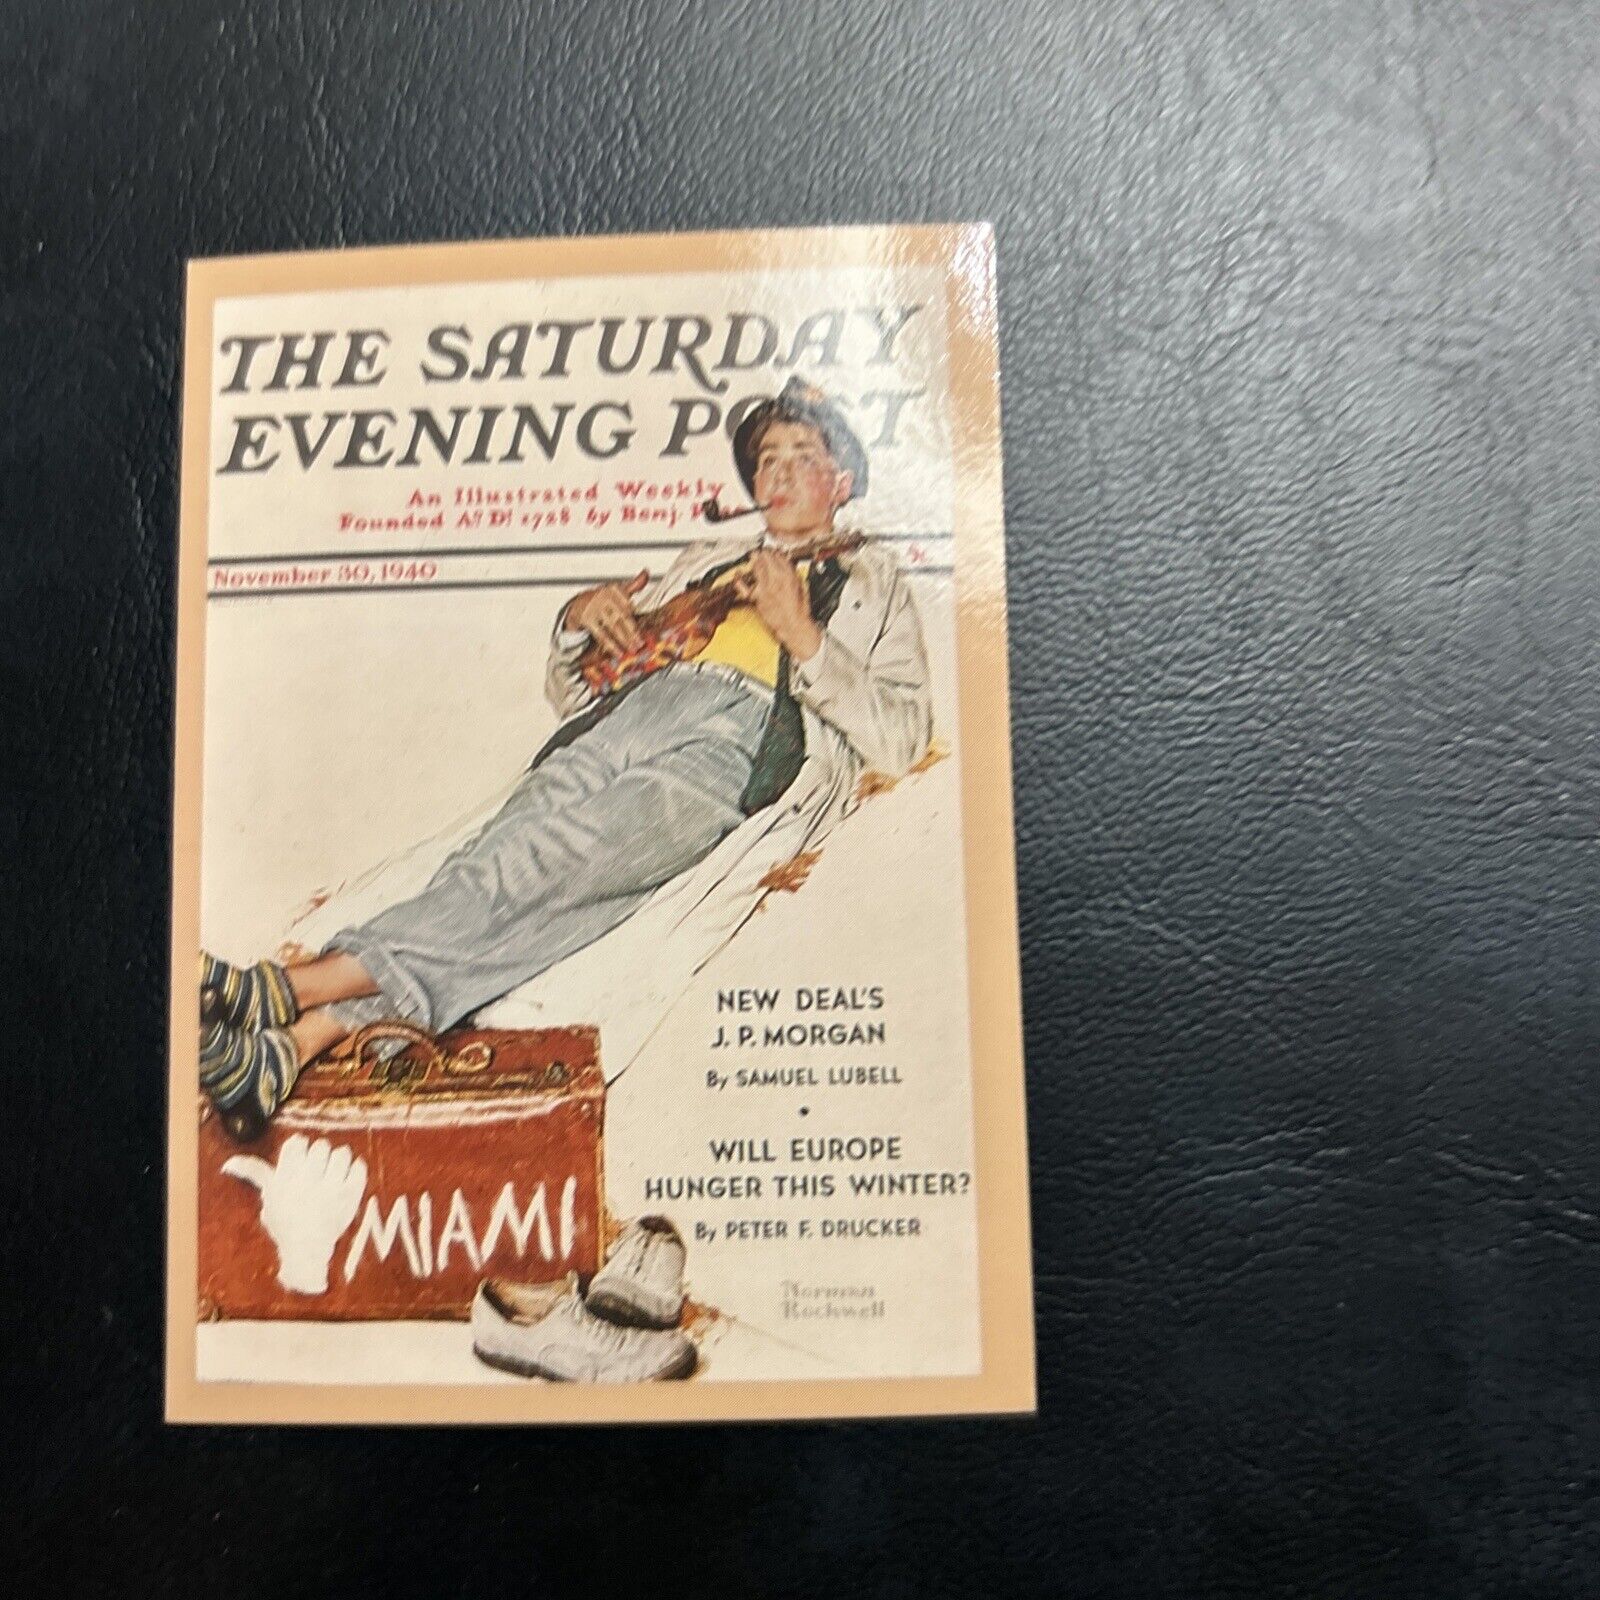 Jb14 Norman Rockwell 2 1995 #50 The Saturday Evening Post 1940 Miami Bound